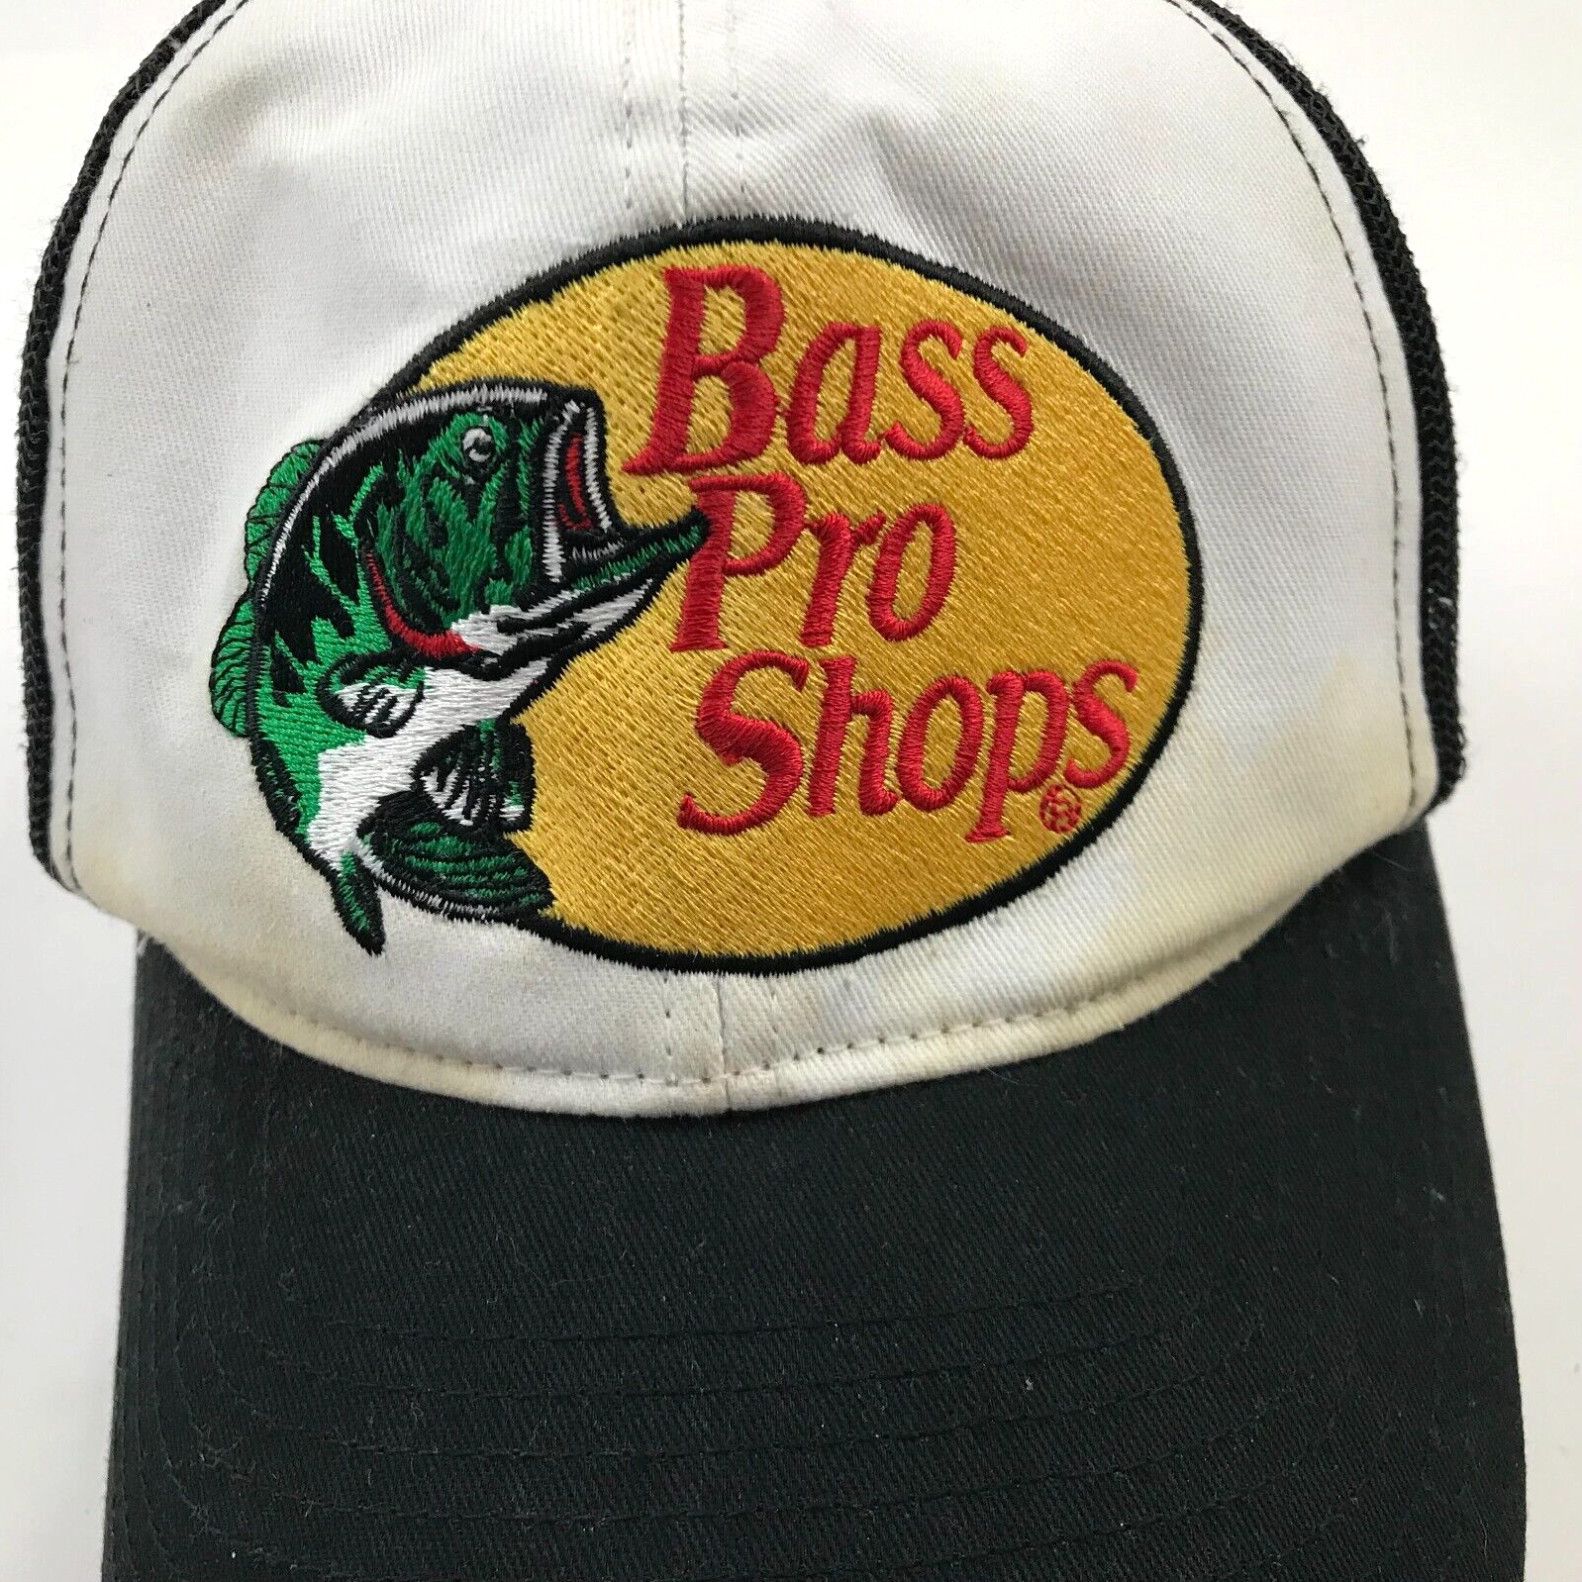 Bass Pro Shops Bass Pro Shops Hat Cap Snapback Trucker White Black